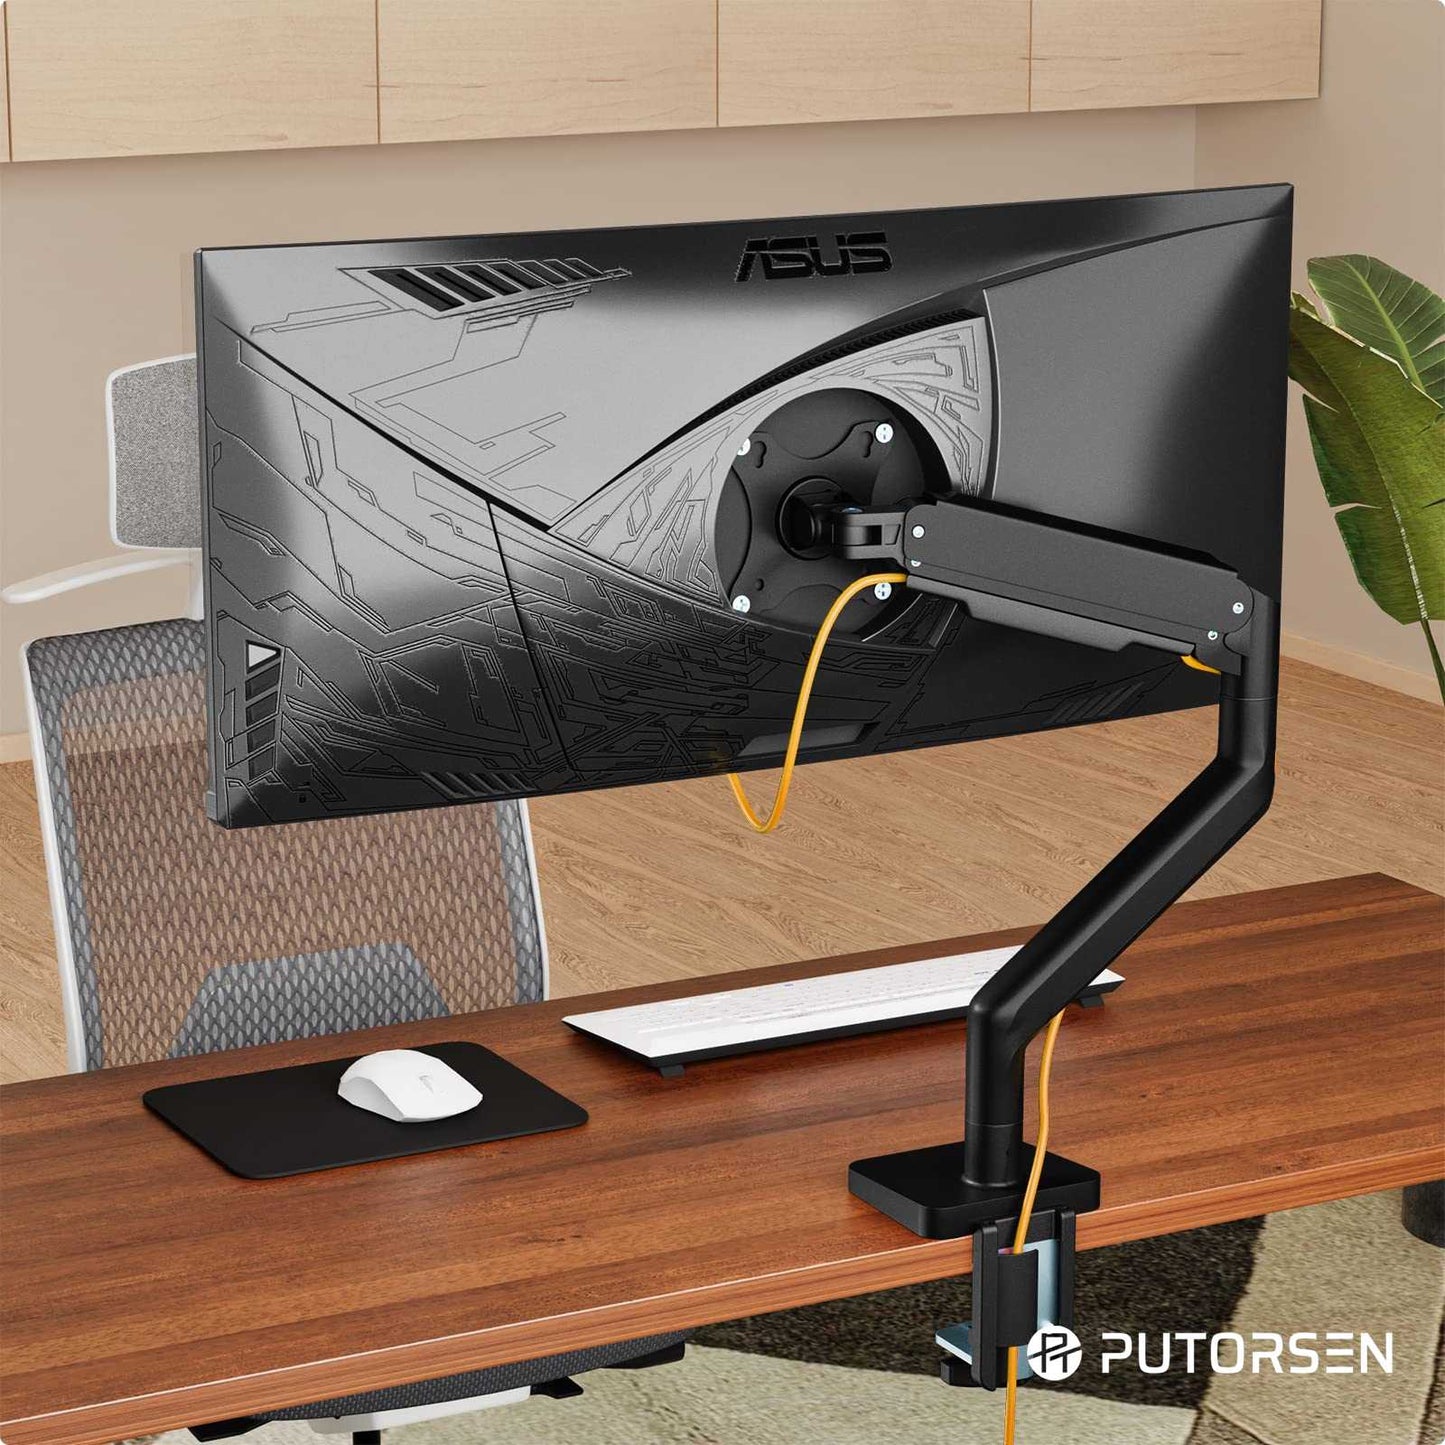 PUTORSEN monitor mount 1 monitor for 17-45 inch flat curved screen PUTORSEN